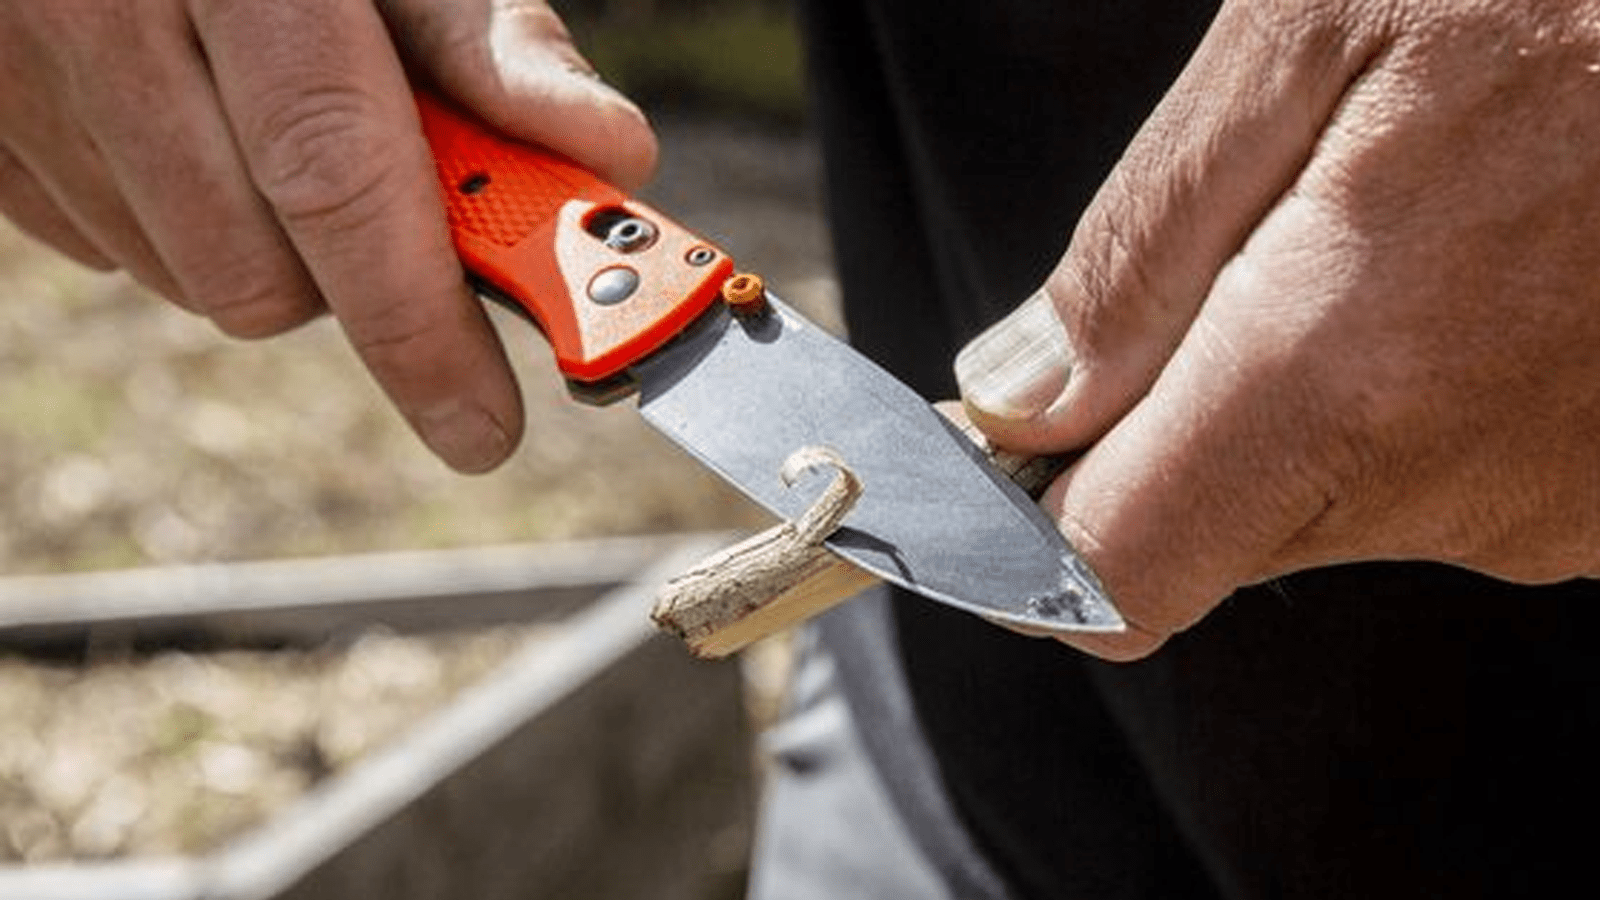 Serrated Pocket knife uses